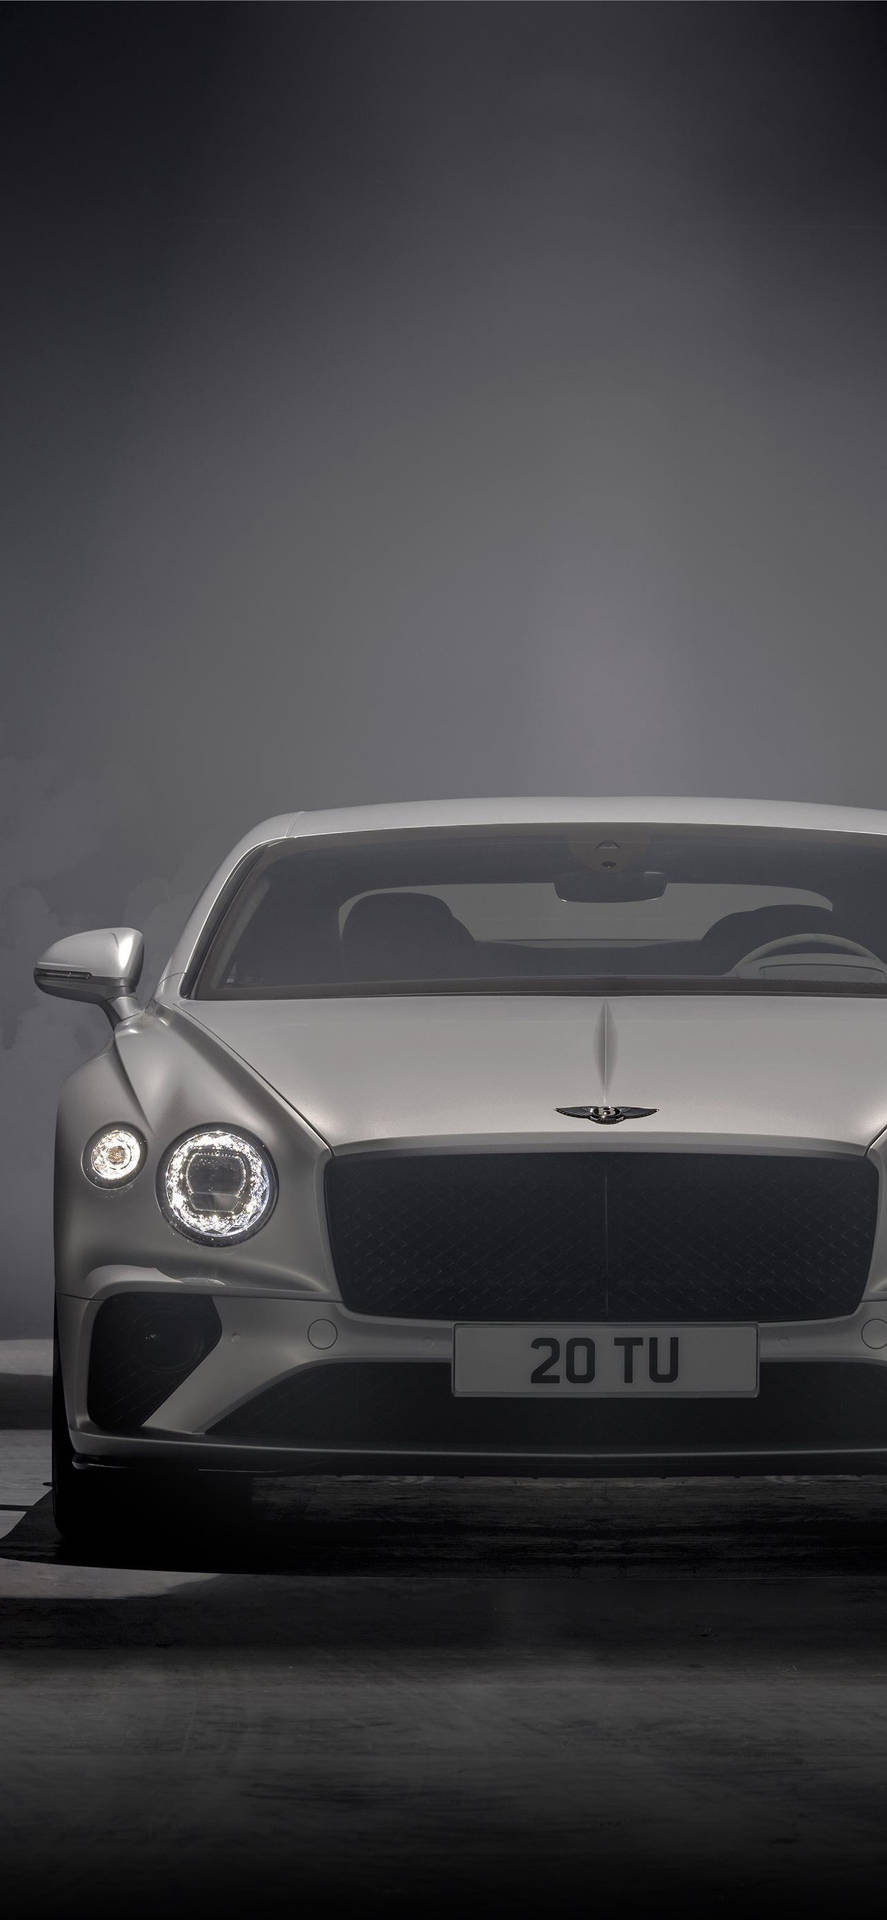 Bentley Car In Greyscale Iphone